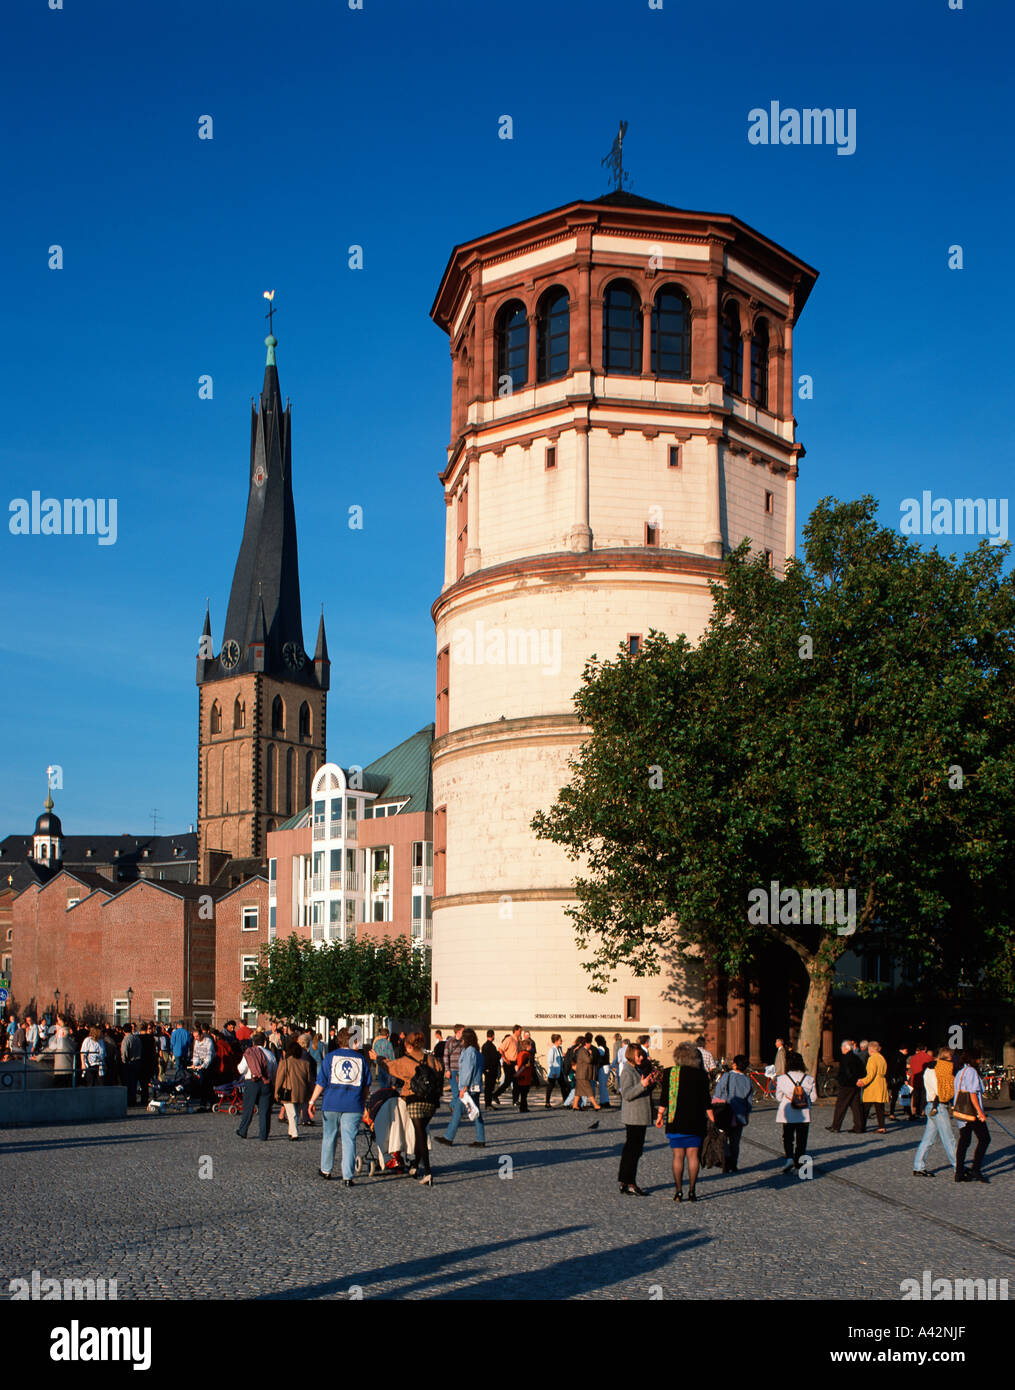 Duesseldorf castel tower promenade Stock Photo